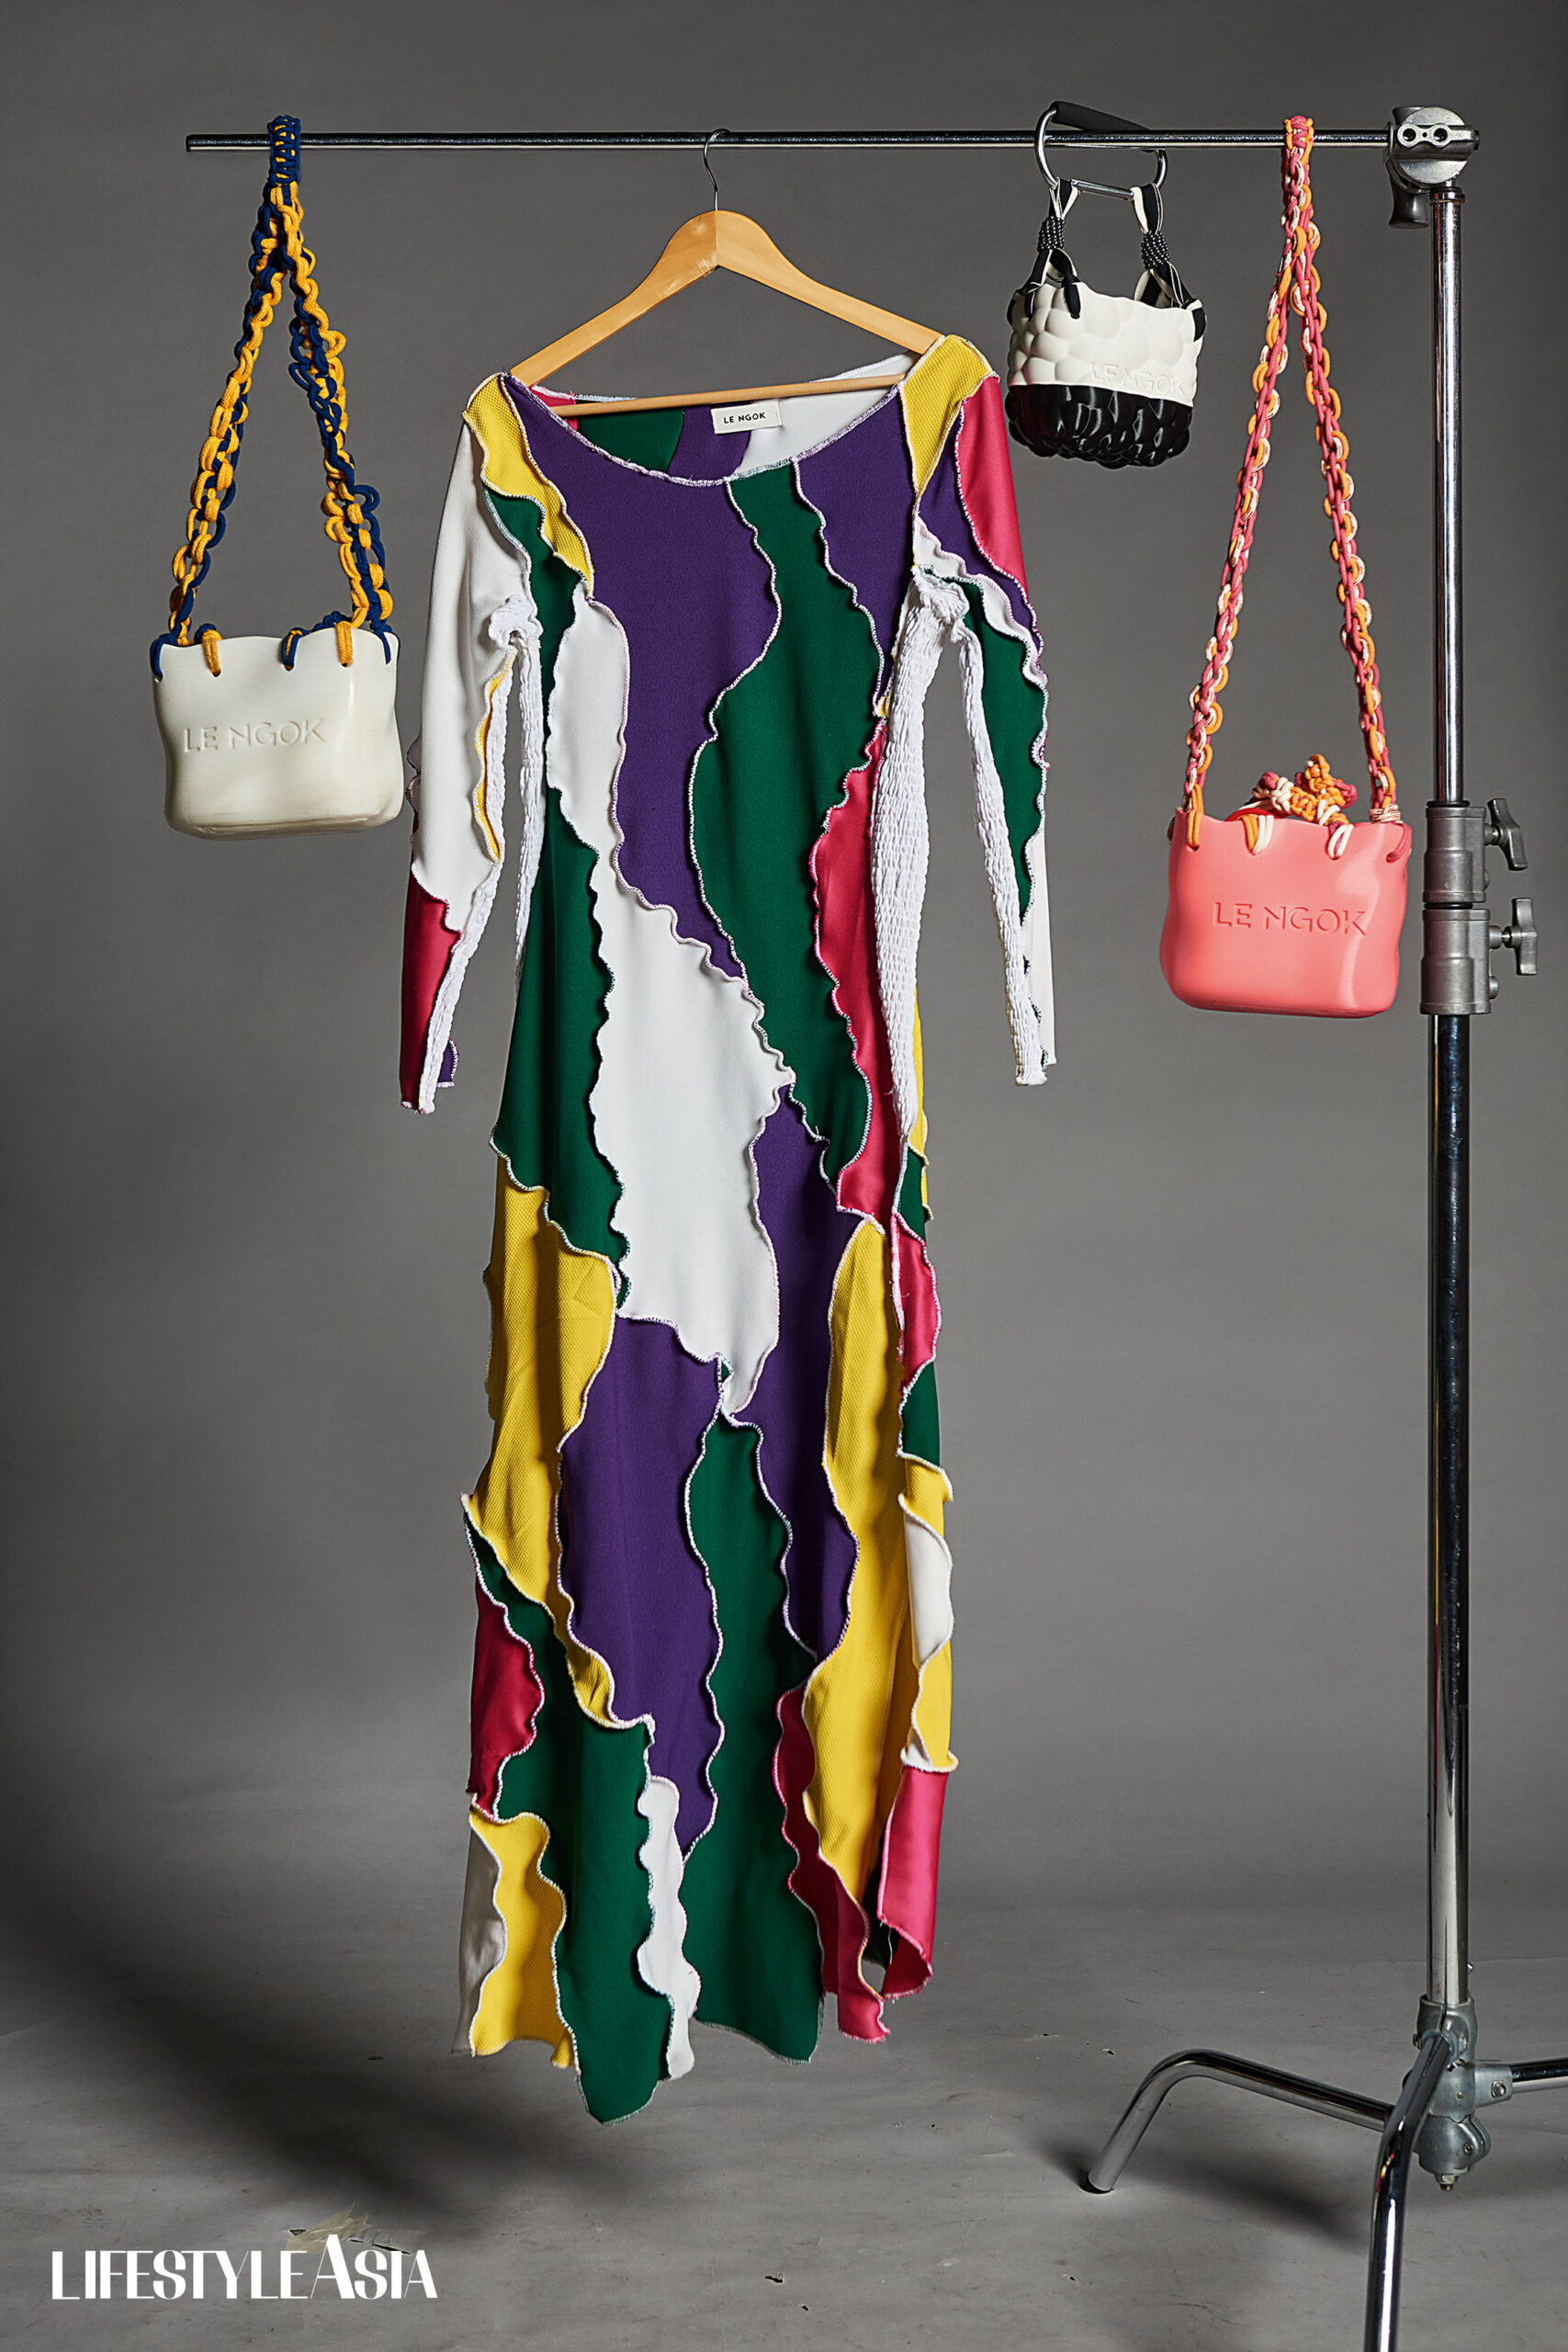 Carla Zhang's dress and bags